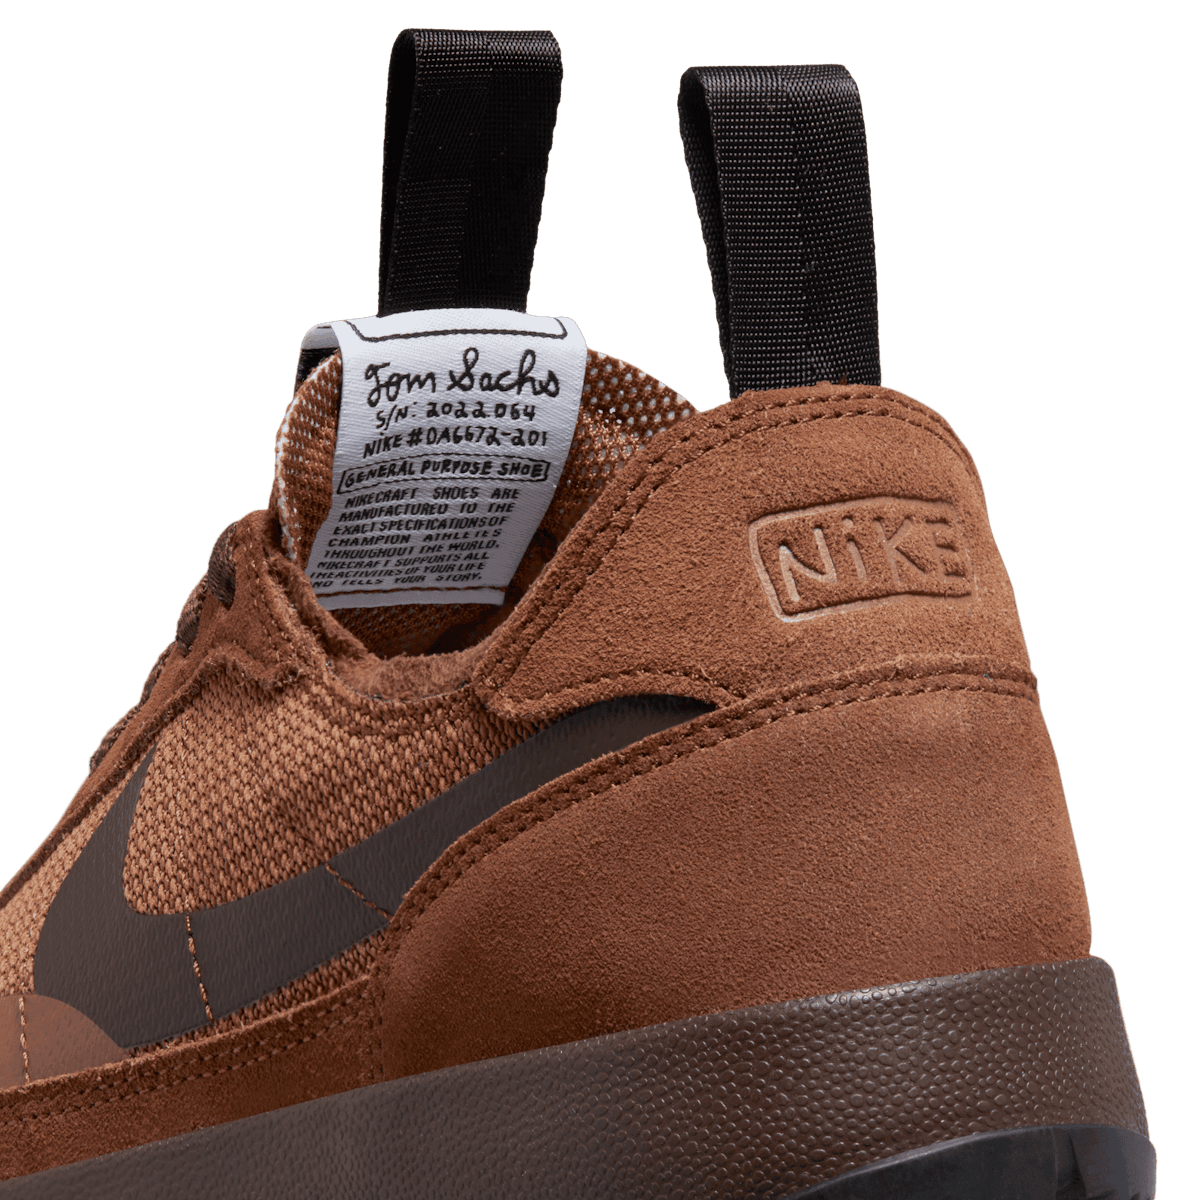 NikeCraft General Purpose Shoe Tom Sachs Pecan Brown Angle 6